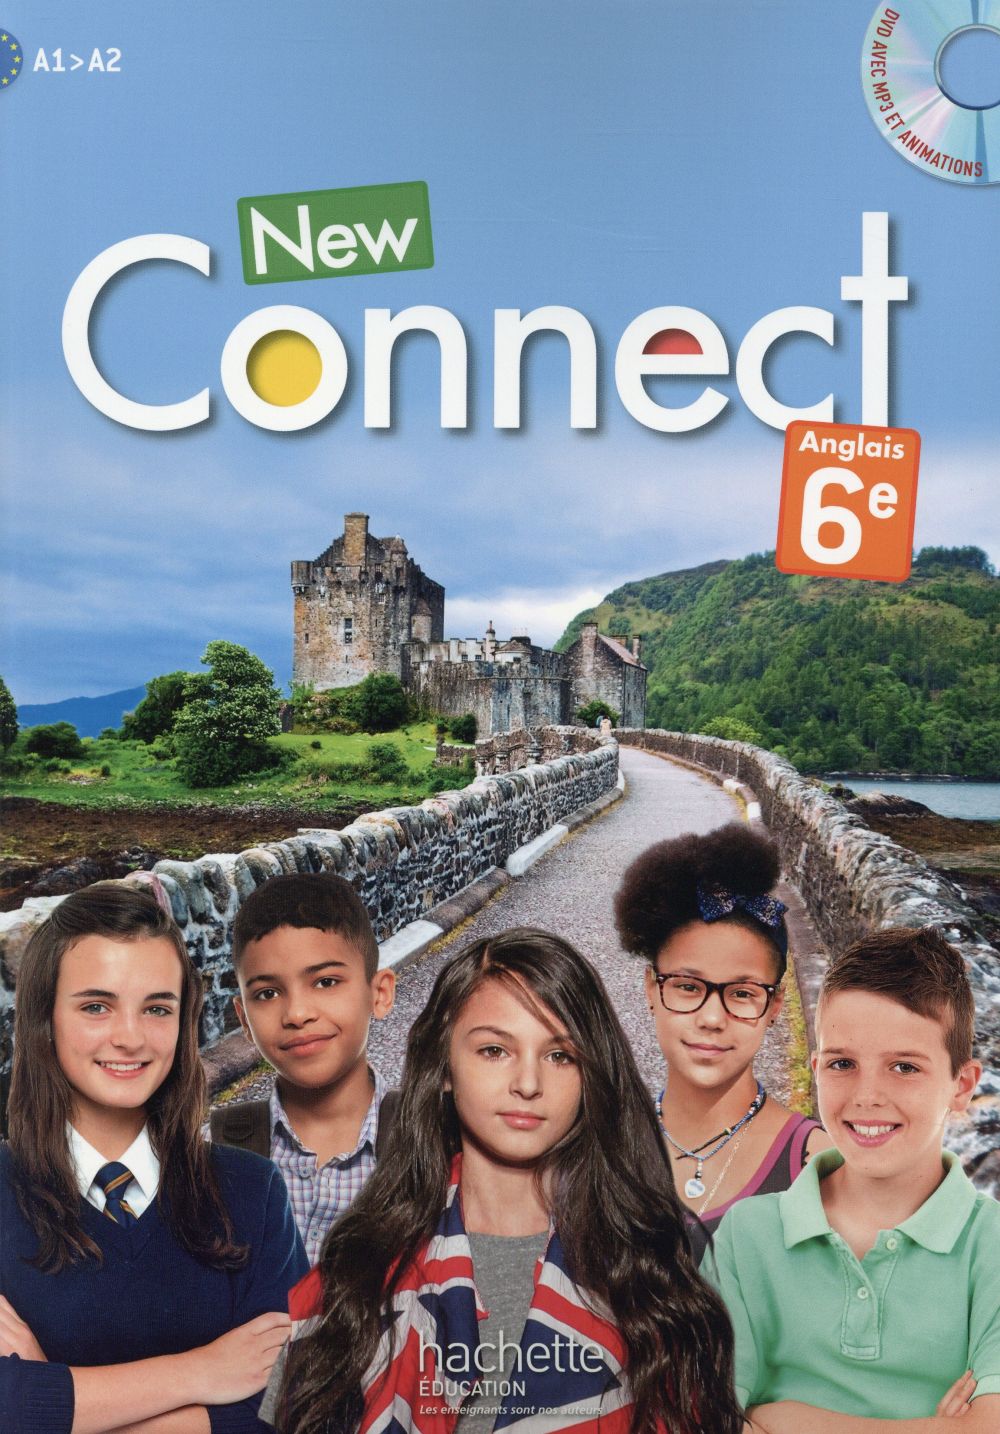 NEW CONNECT 6E - ANGLAIS - LIVRE DE L'ELEVE + DVD ELEVE INCLUS - EDITION 2015